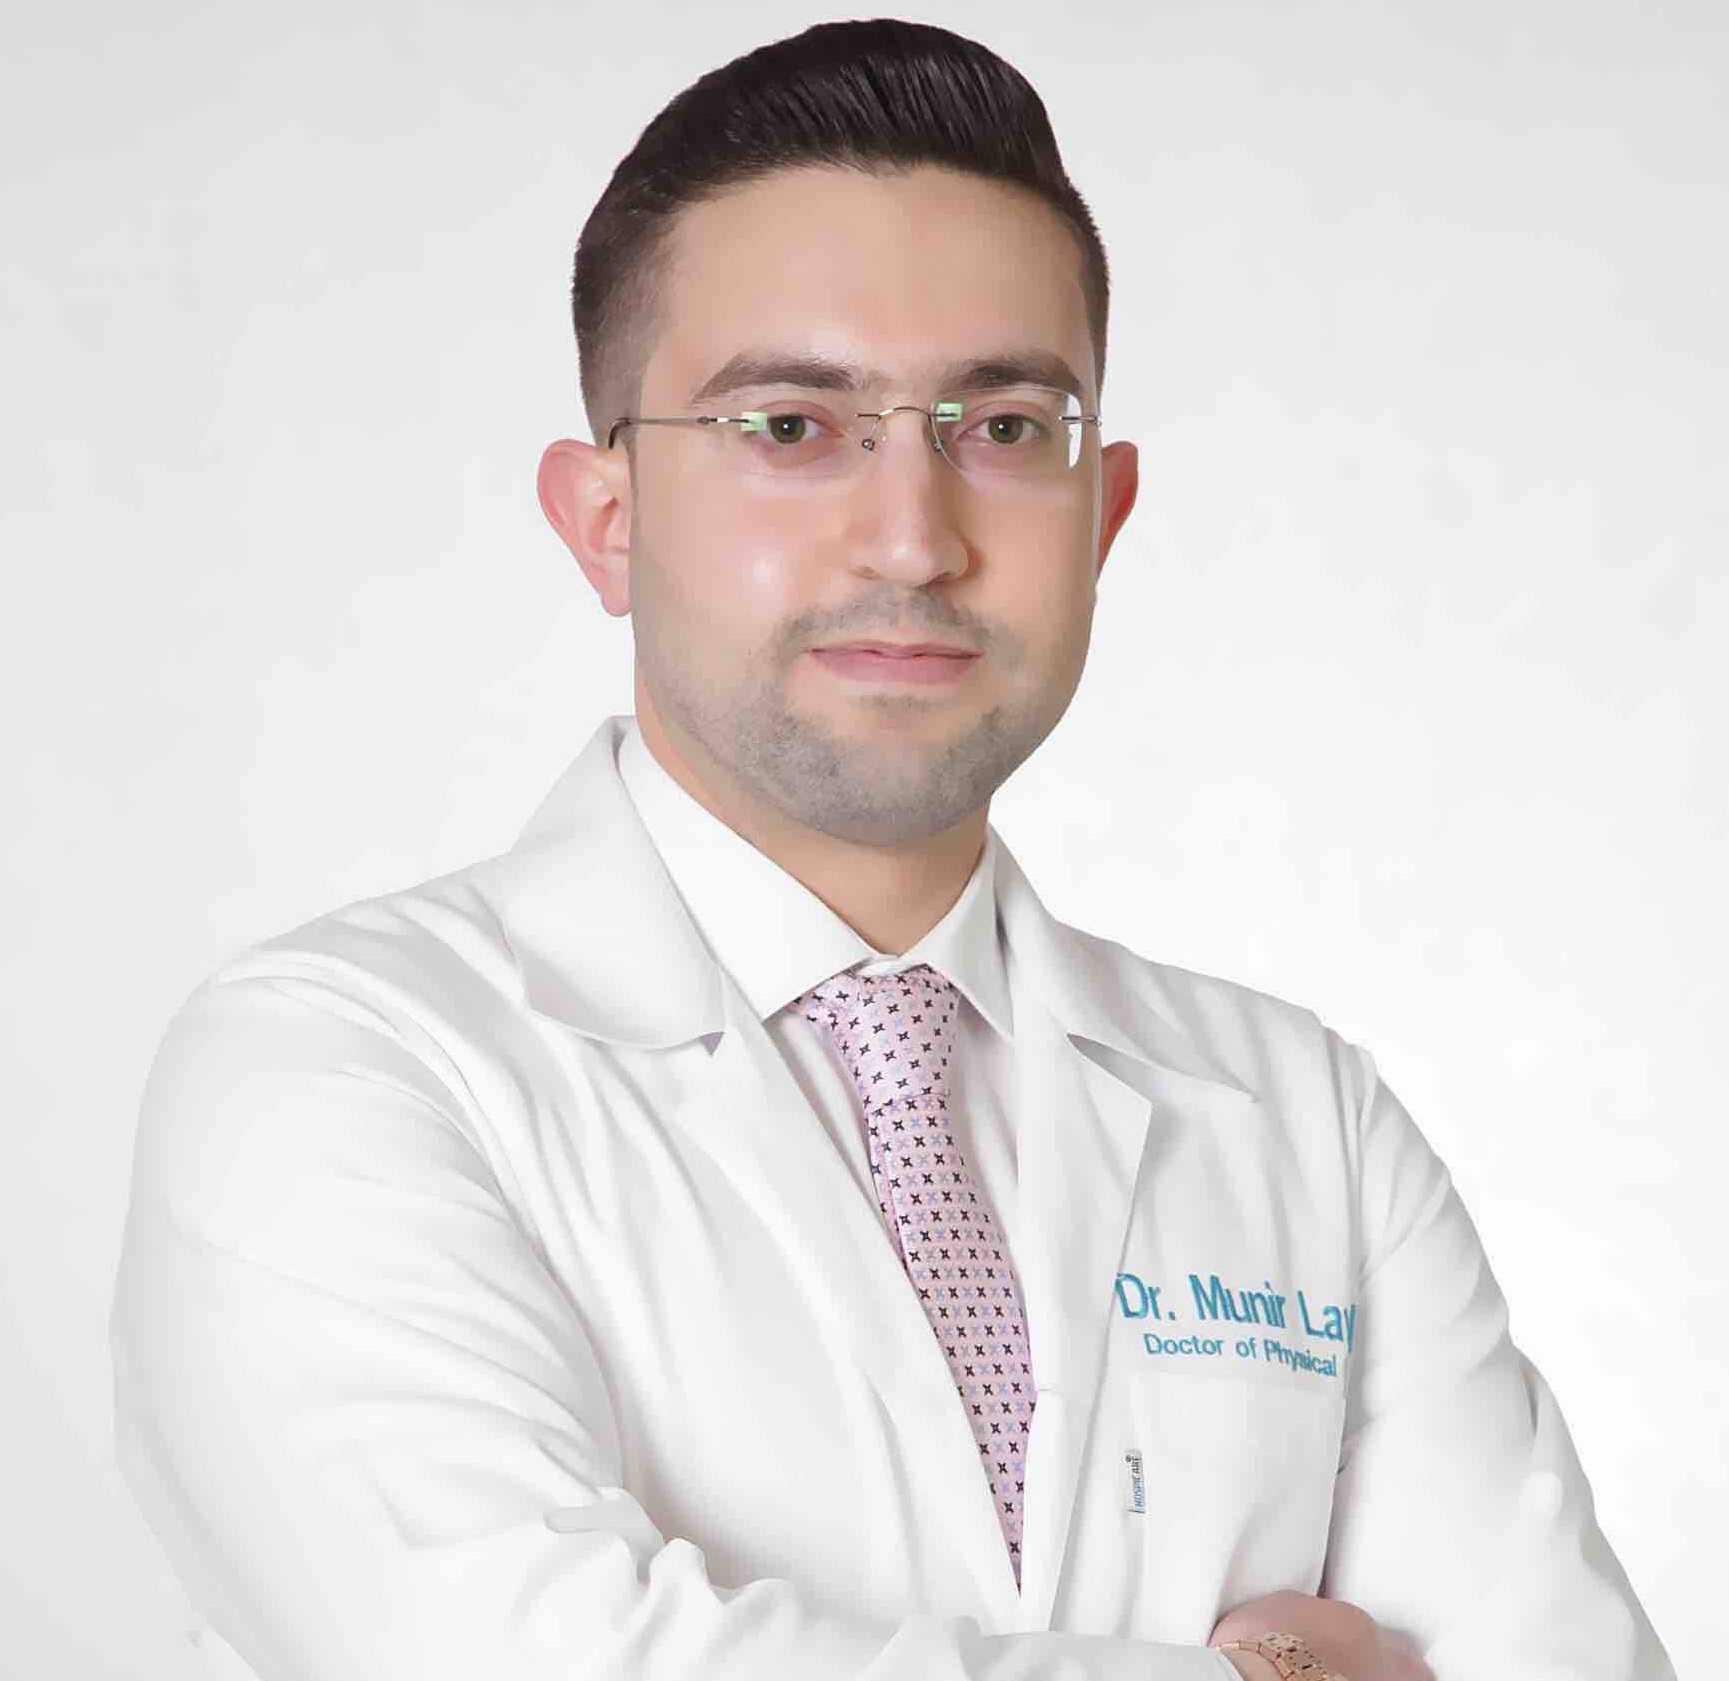 Dr. Munir Lawand